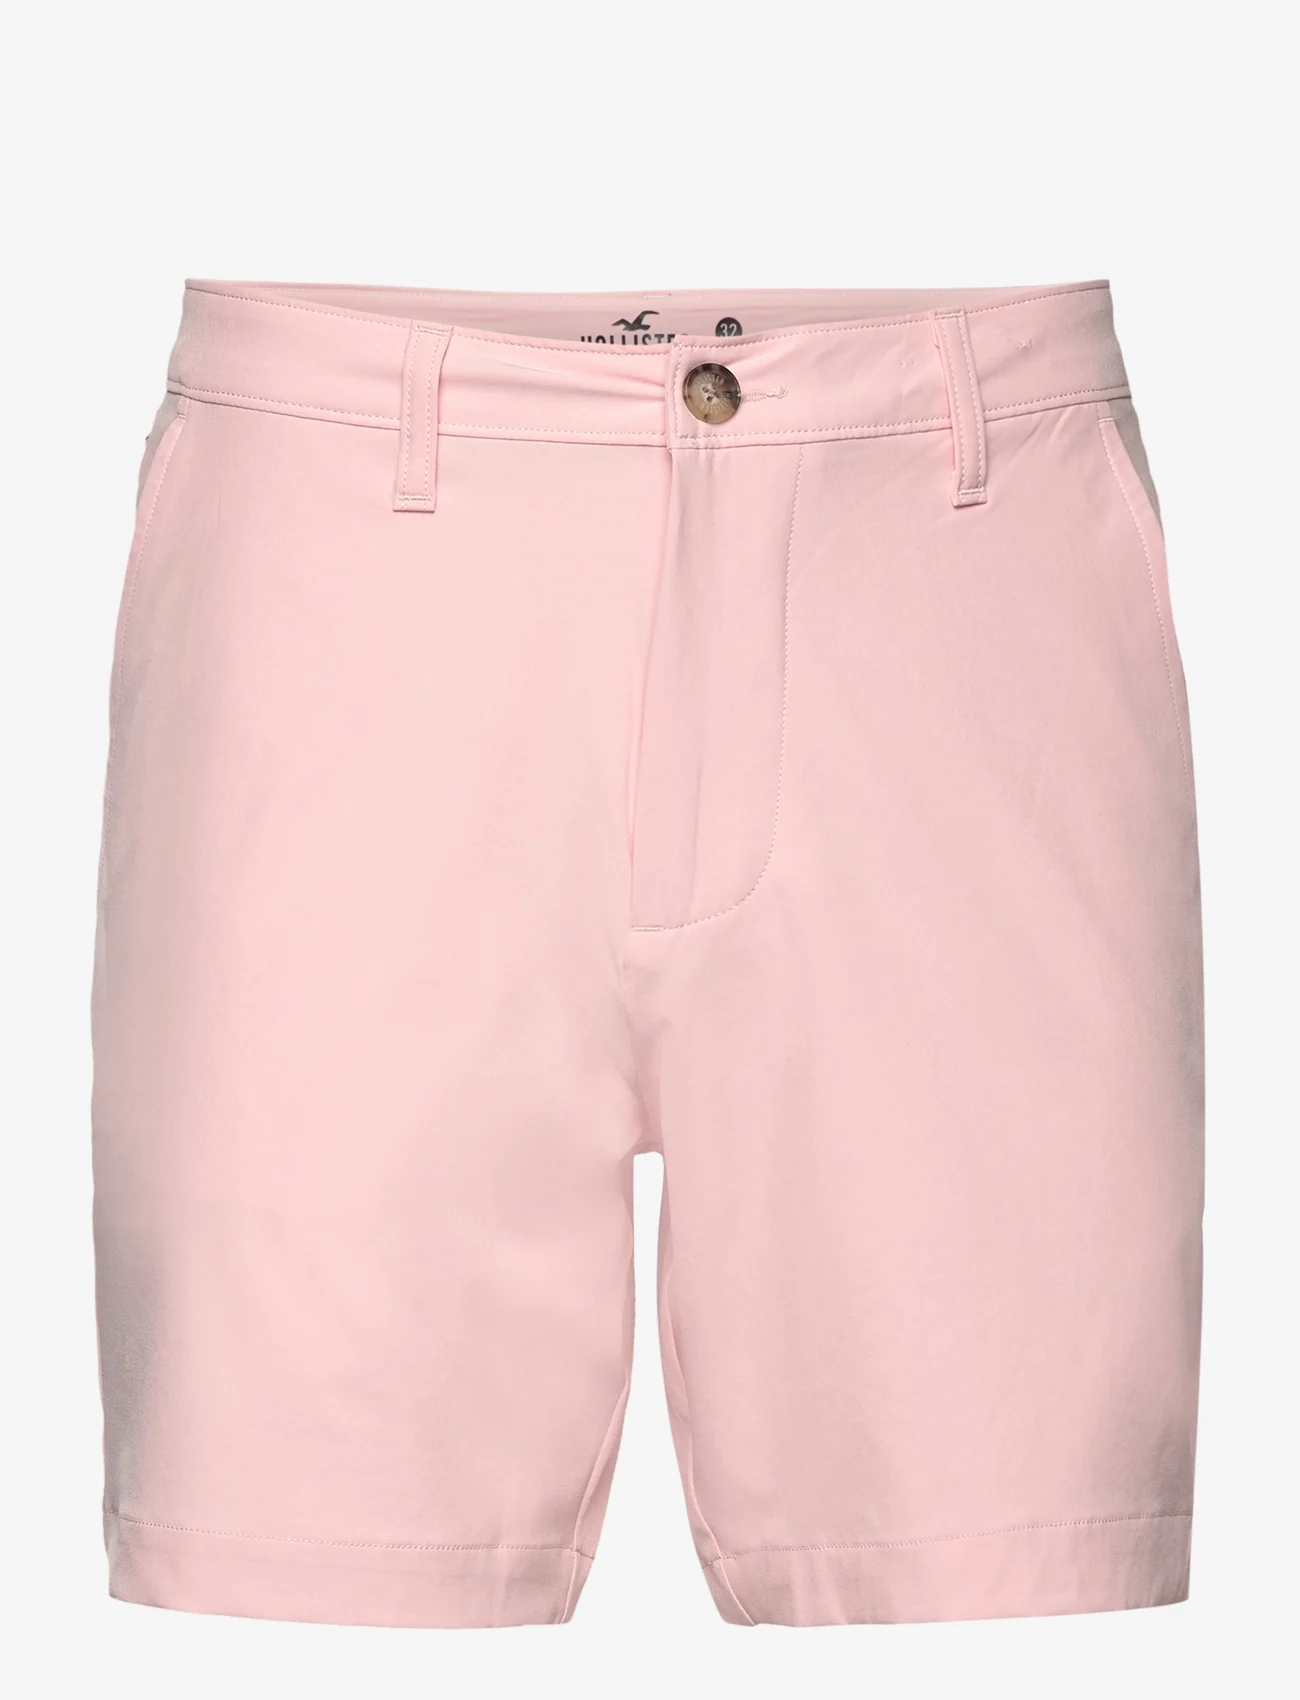 Hollister - HCo. GUYS SHORTS - chinos shorts - pink - 0